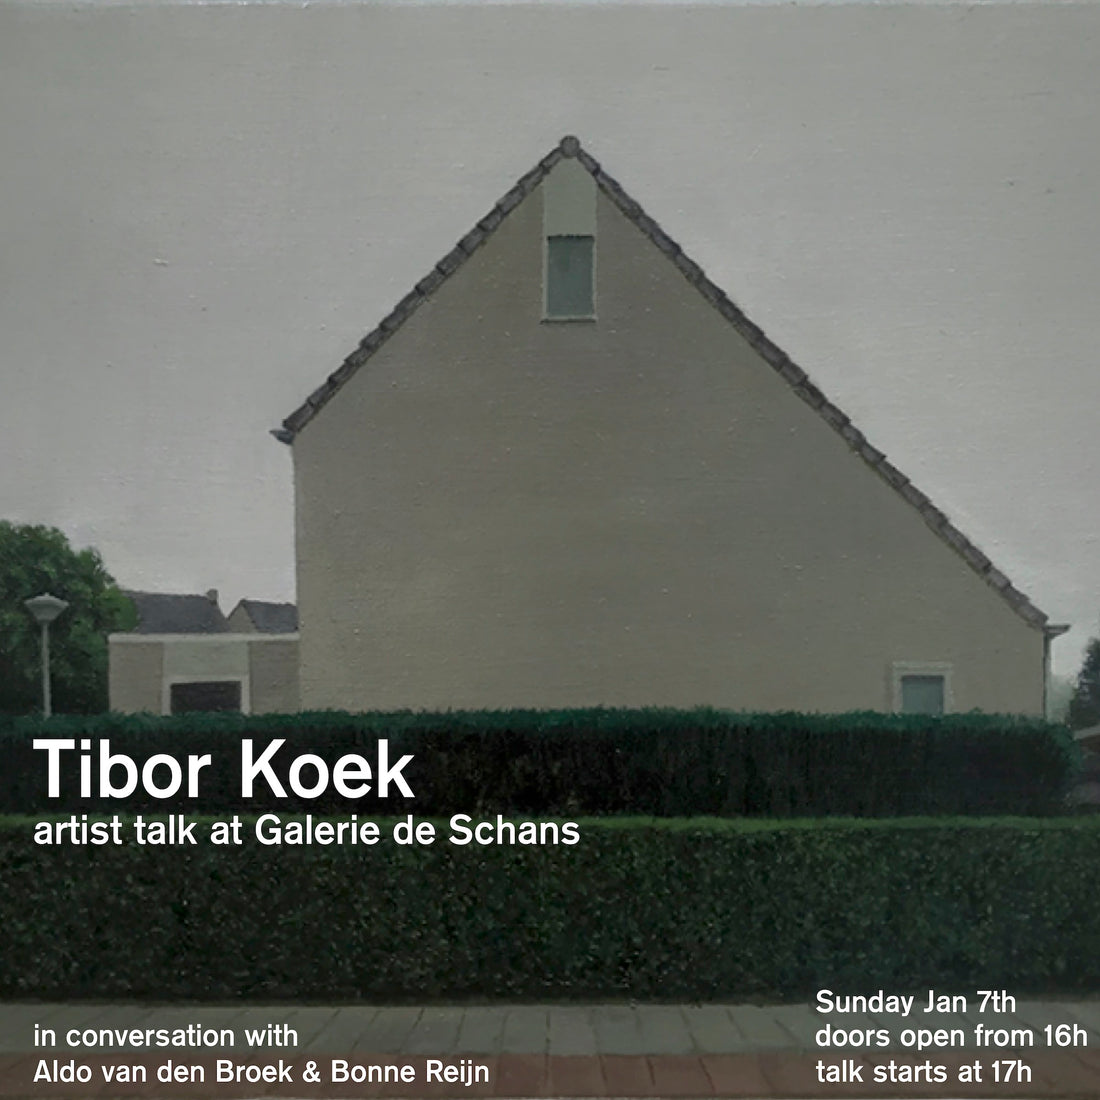 TIBOR KOEK ARTIST TALK AT GALERIE DE SCHANS